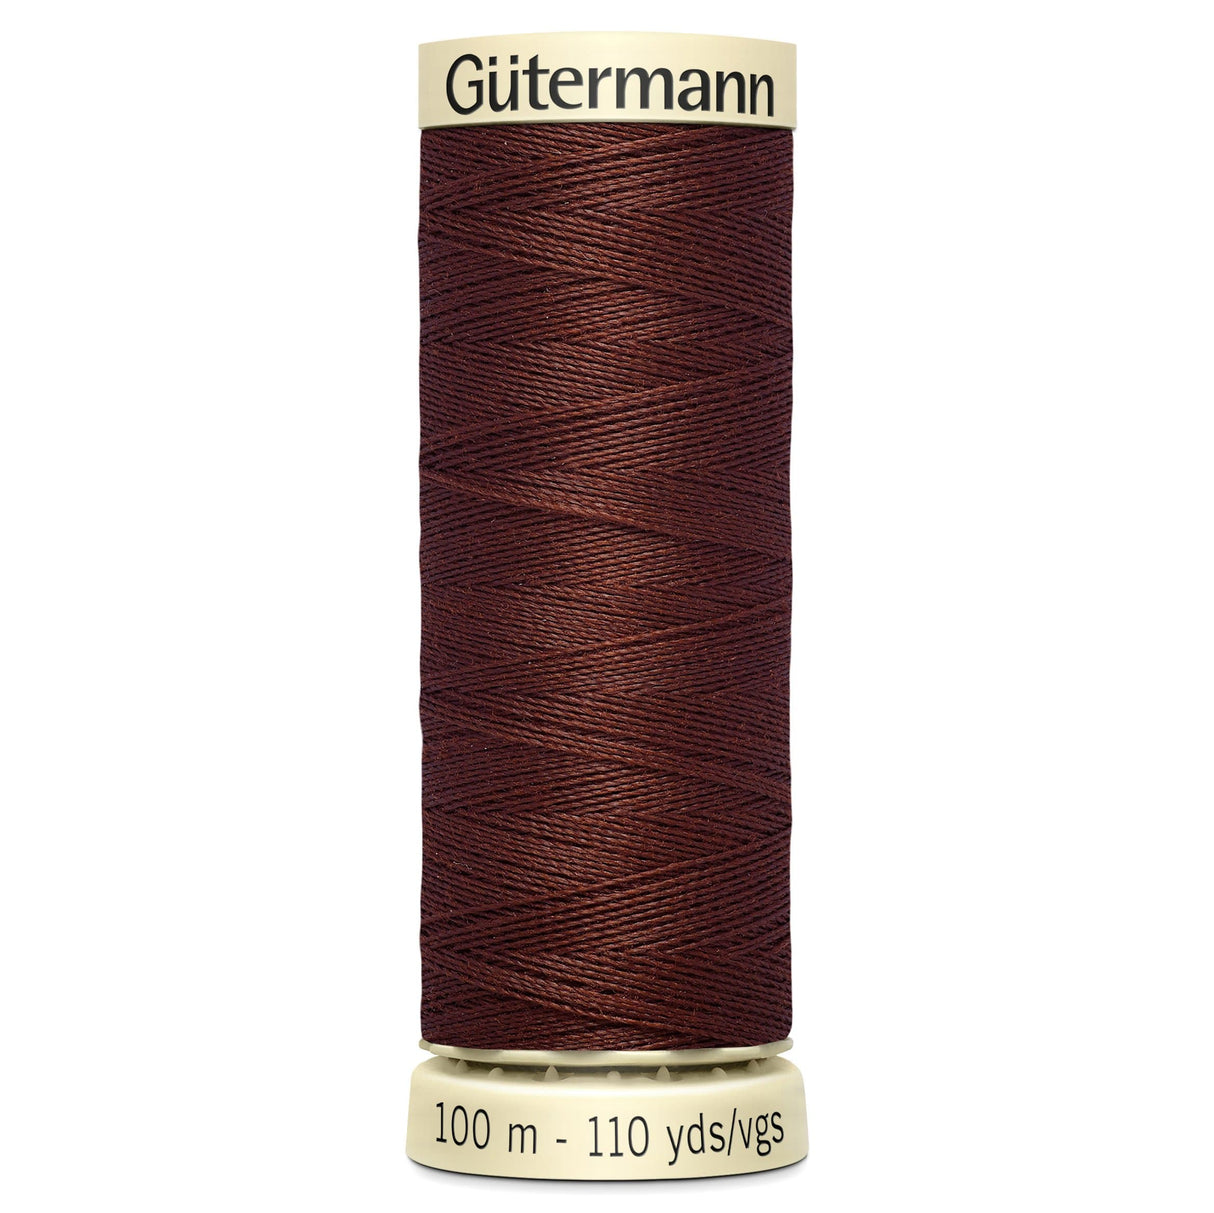 Groves Haberdashery 230 Gutermann Thread Sewing Cotton 100 m Black to Pink